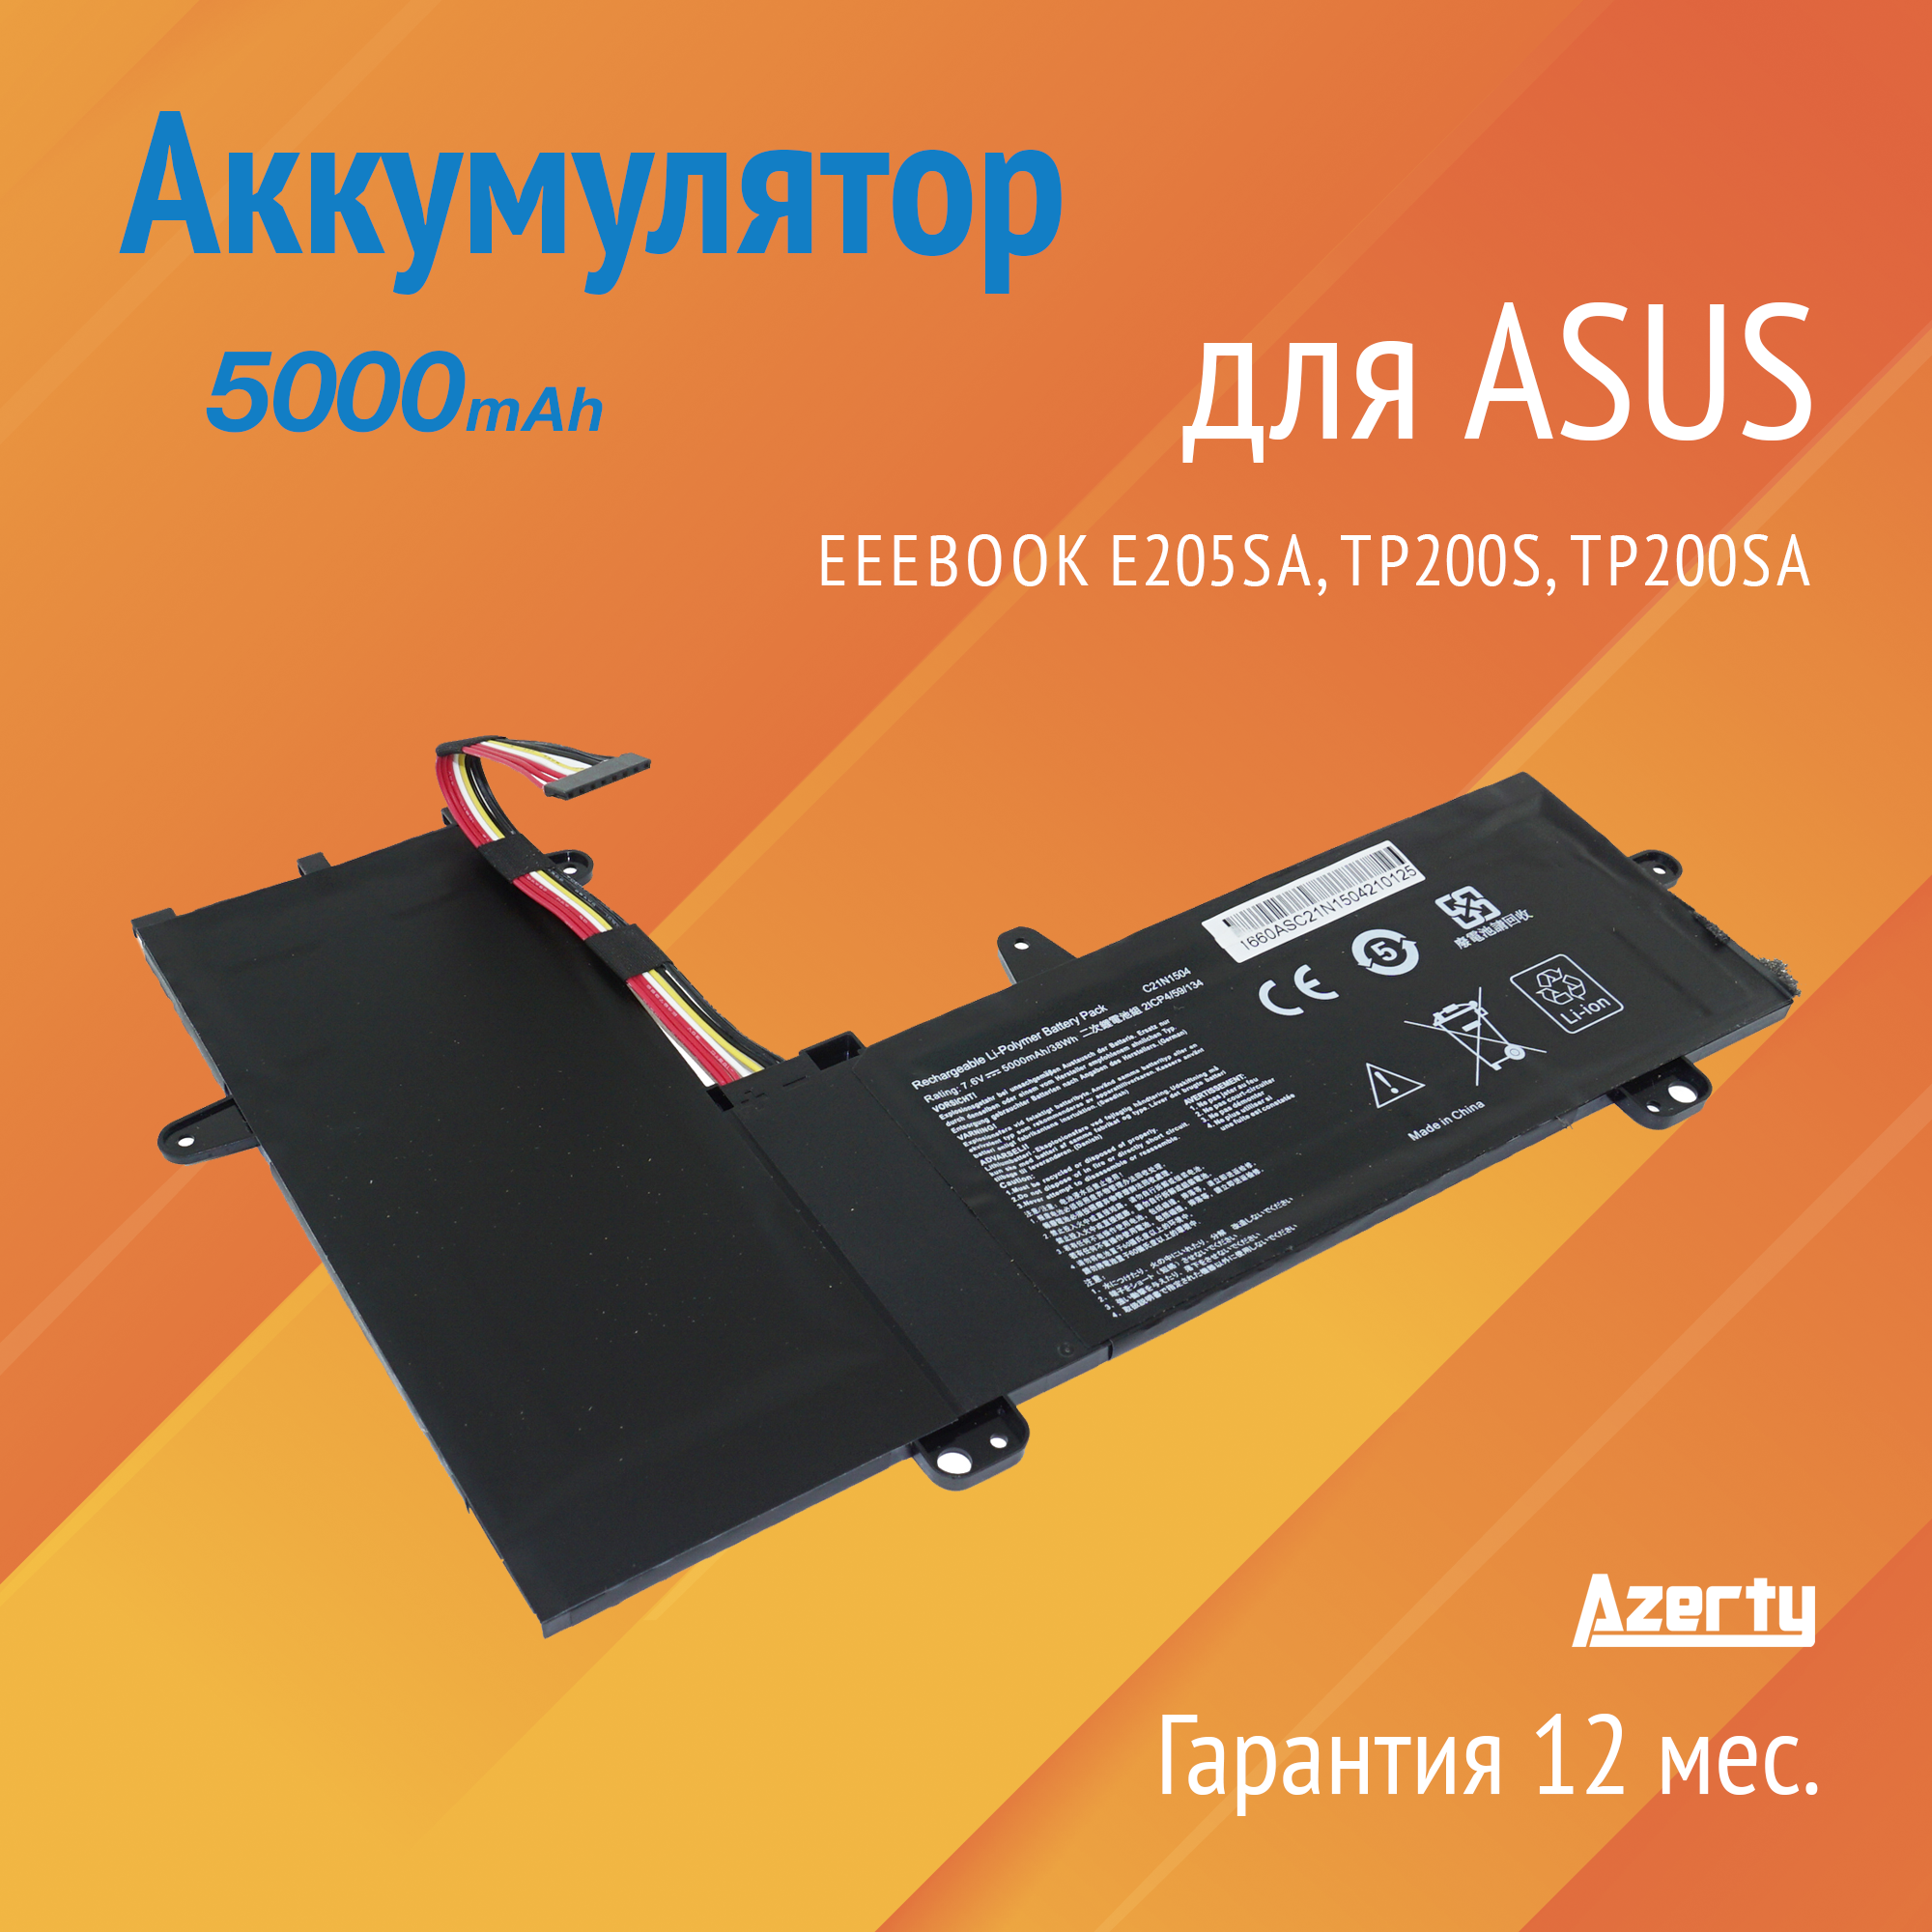 Аккумулятор C21N1504 для Asus EeeBook E205SA / TP200S / TP200SA (B21N1504, 0B200-01710100) 7.6V 5000mAh